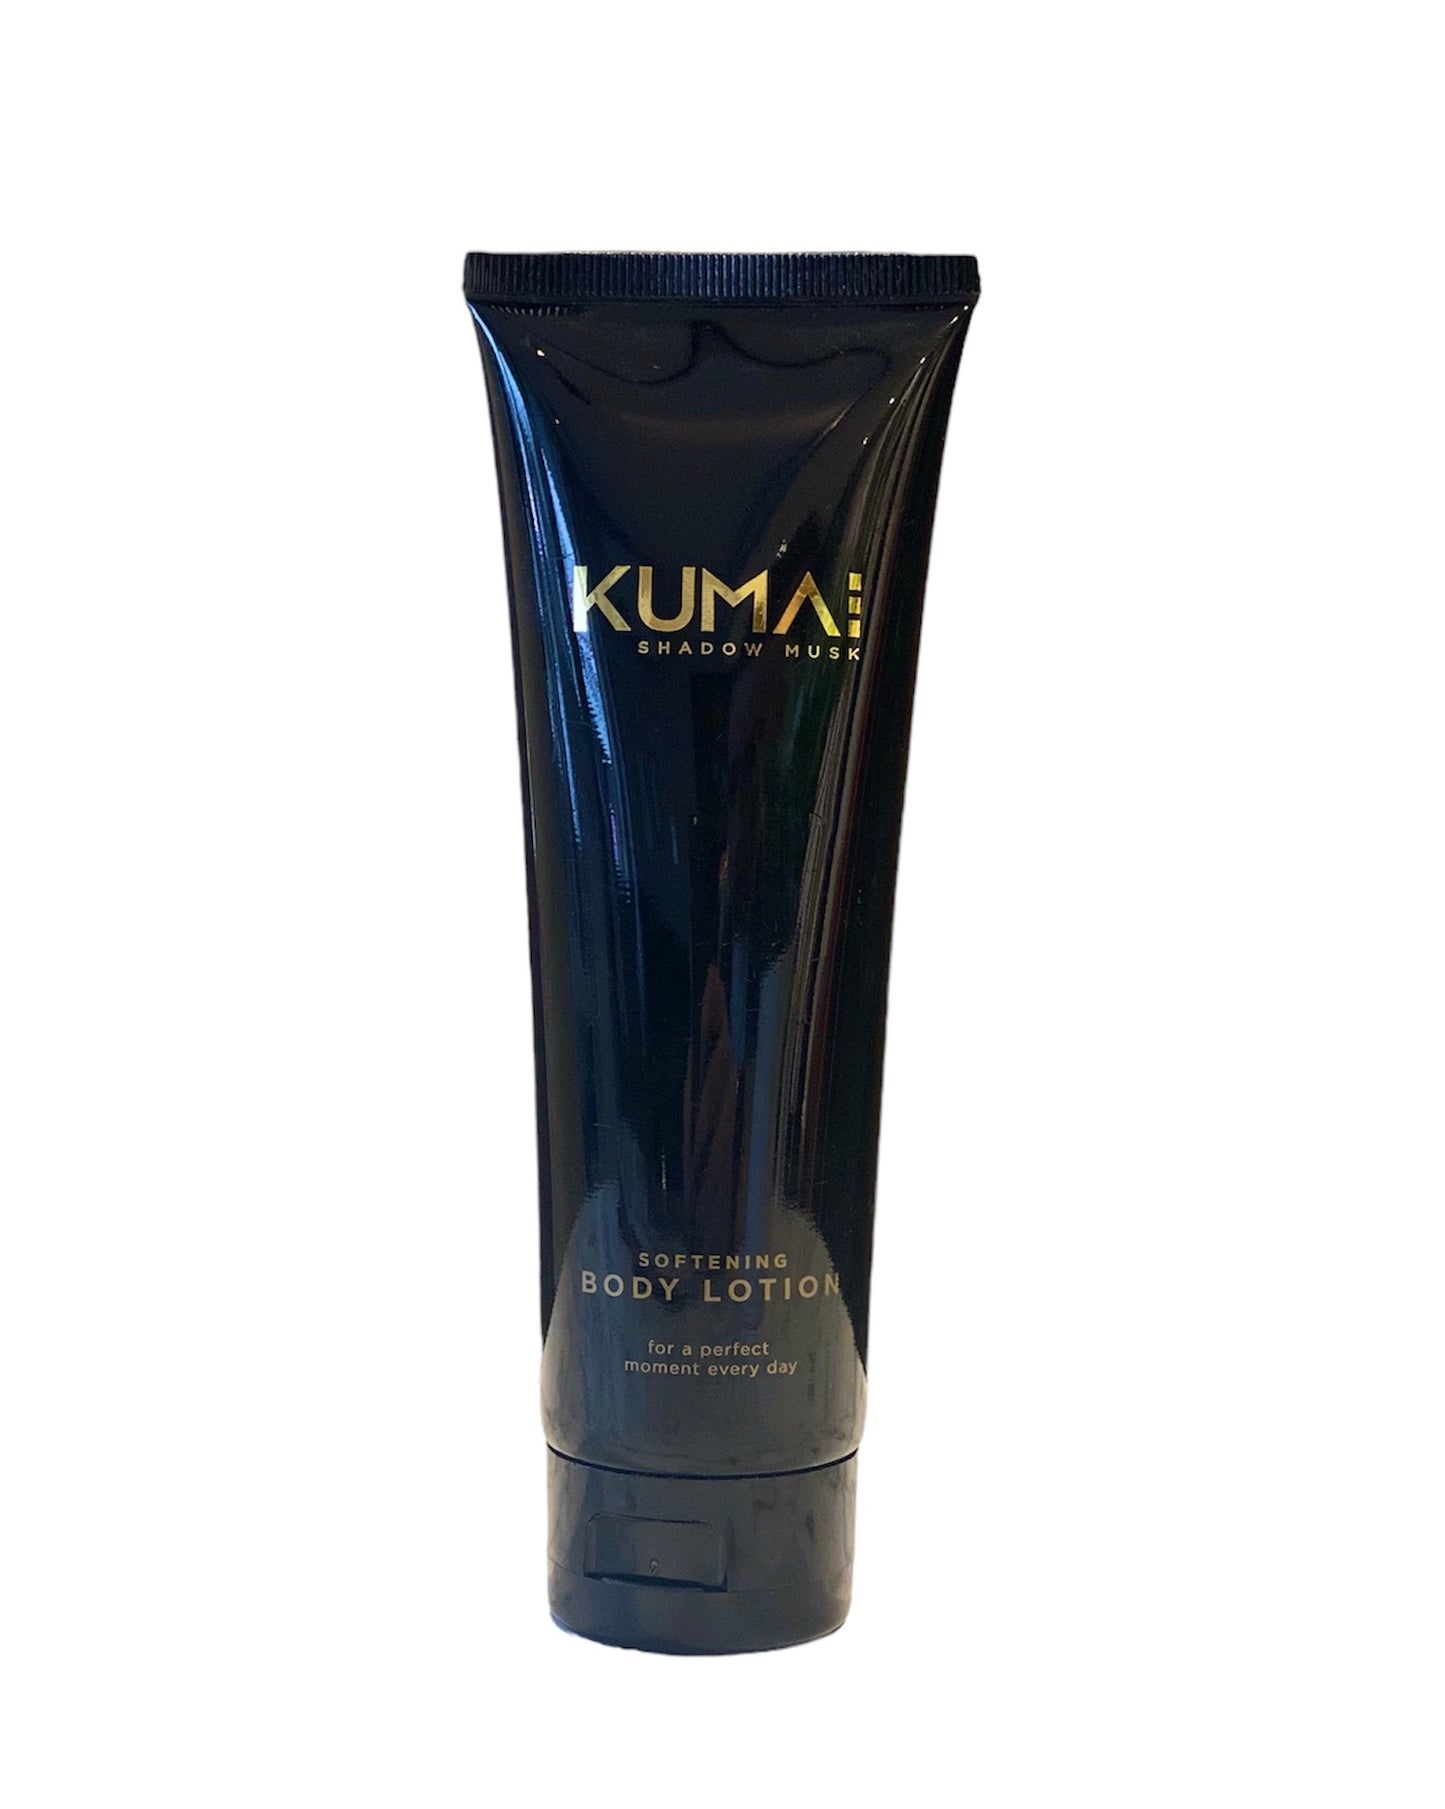 KUMAI Shadow Musk - Softening Body Lotion